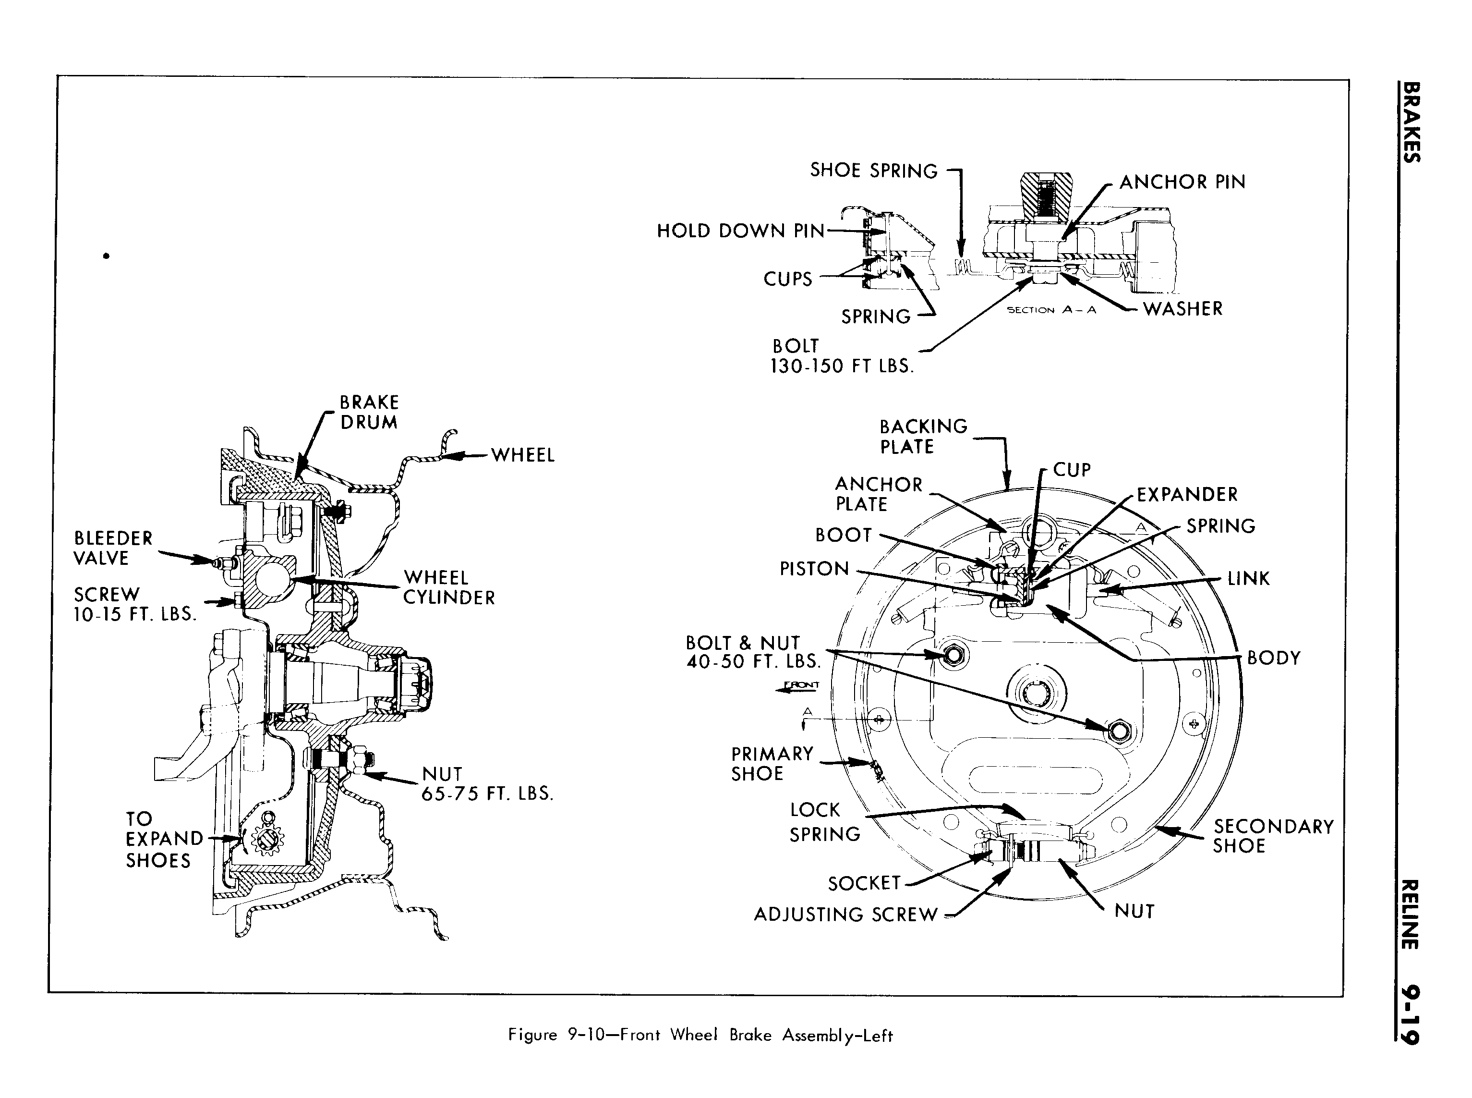 n_09 1961 Buick Shop Manual - Brakes-019-019.jpg